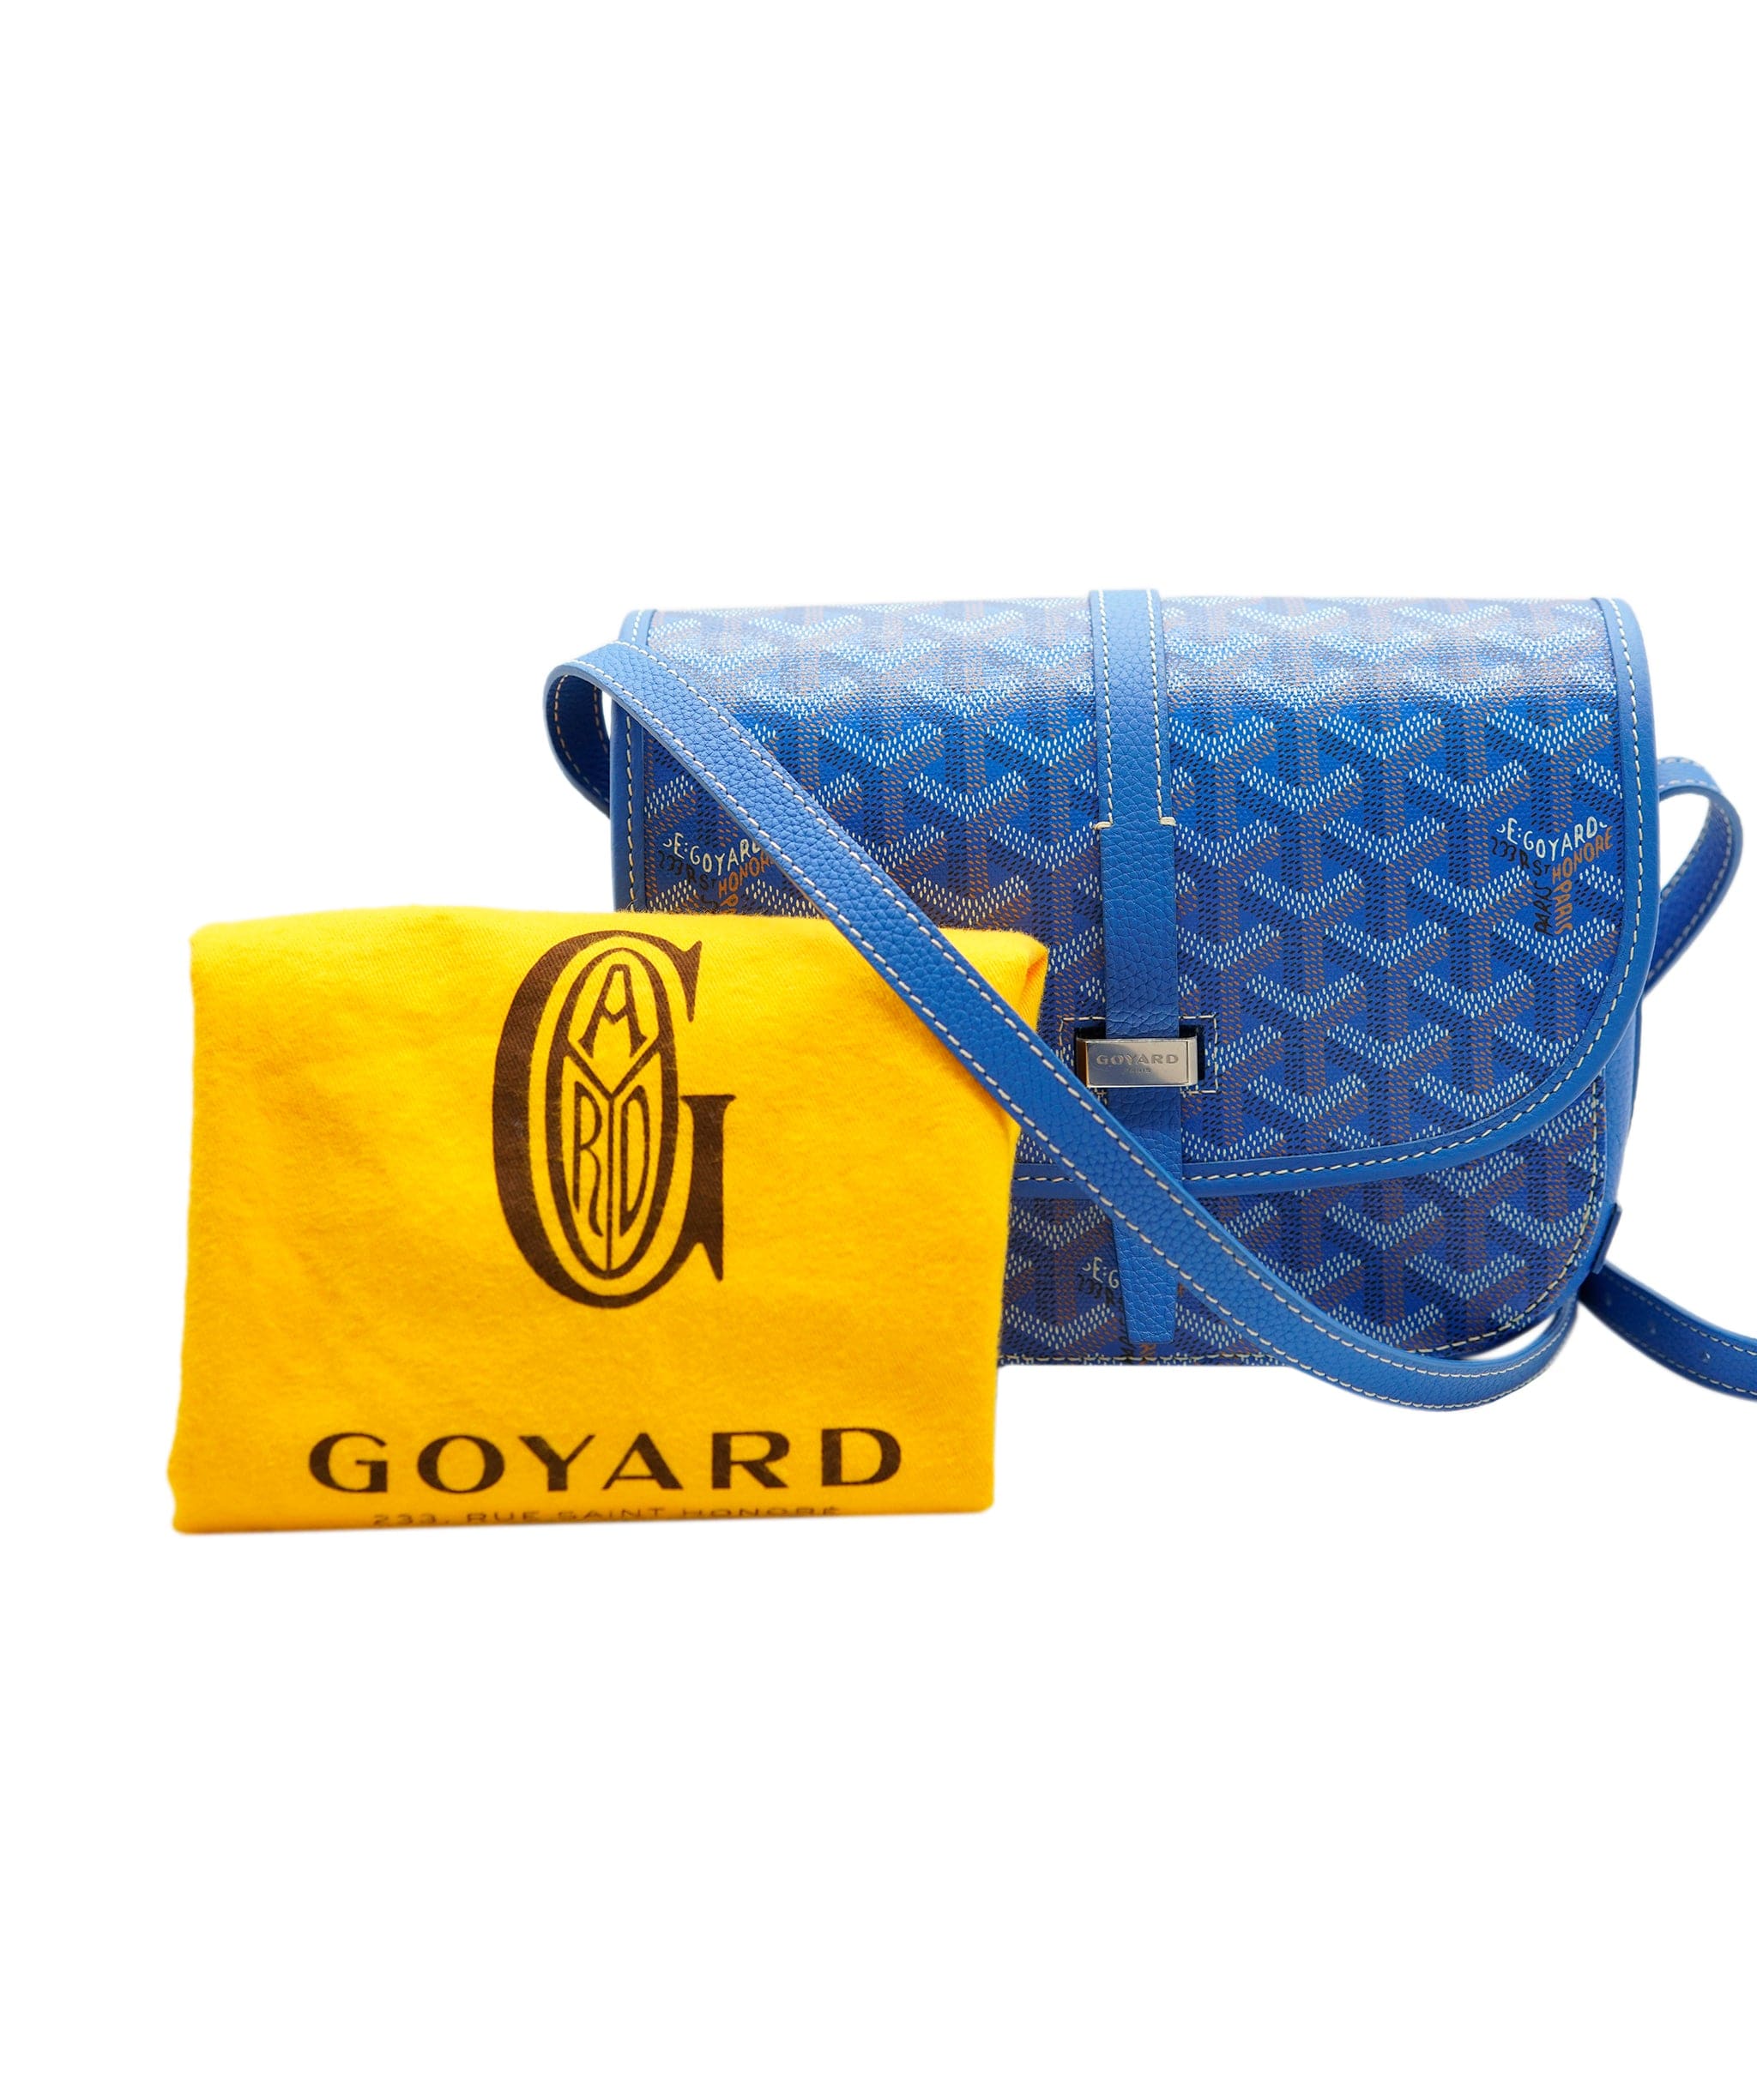 Goyard Goyard Belvedere PM Bag blue  AVL1076